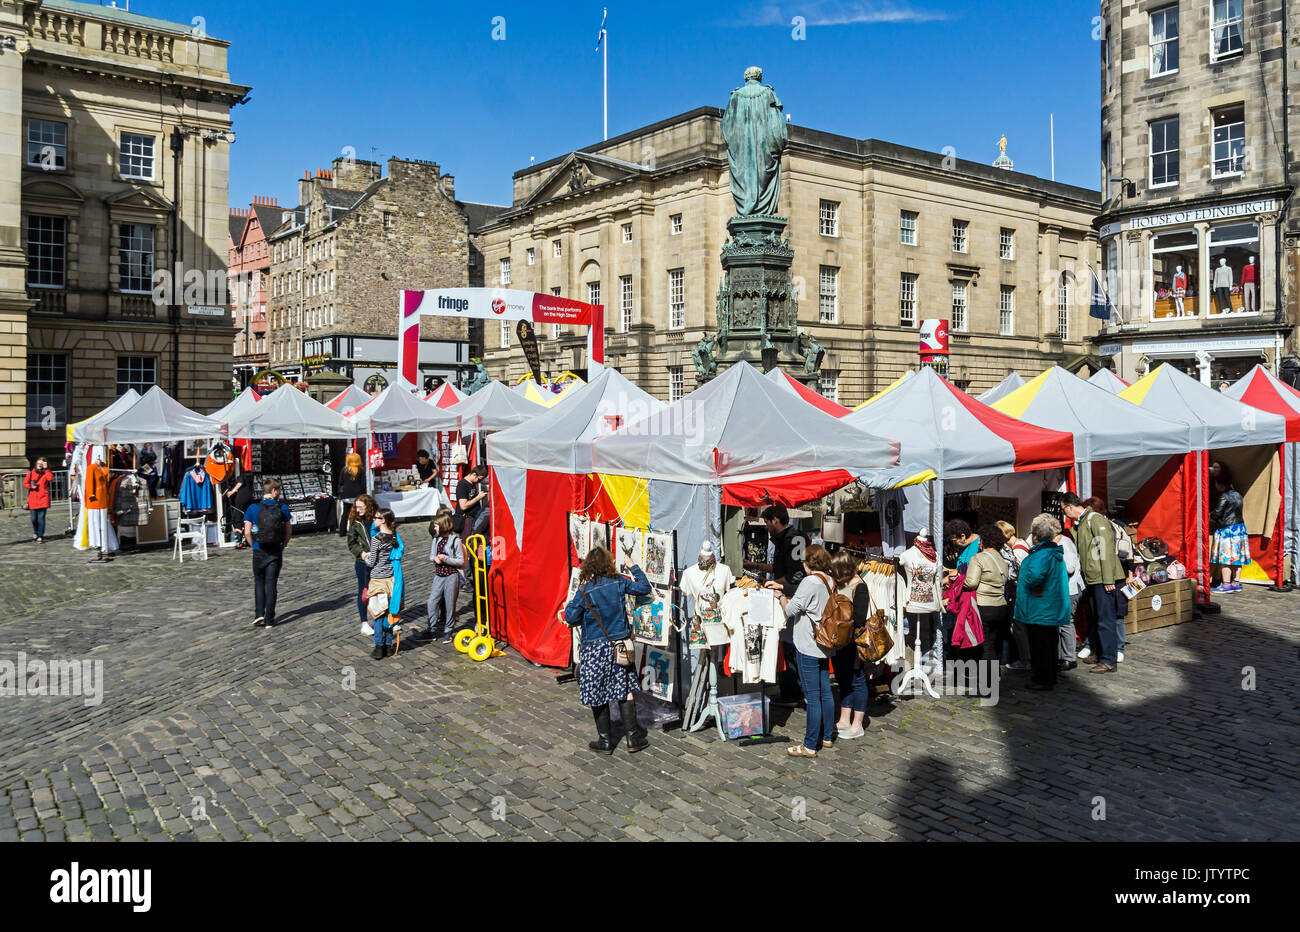 Stalls in West Parliament Square Edinburgh Festival Fringe 2017 in the High Street of the Royal Mile Edinburgh Scotland UK Stock Photo